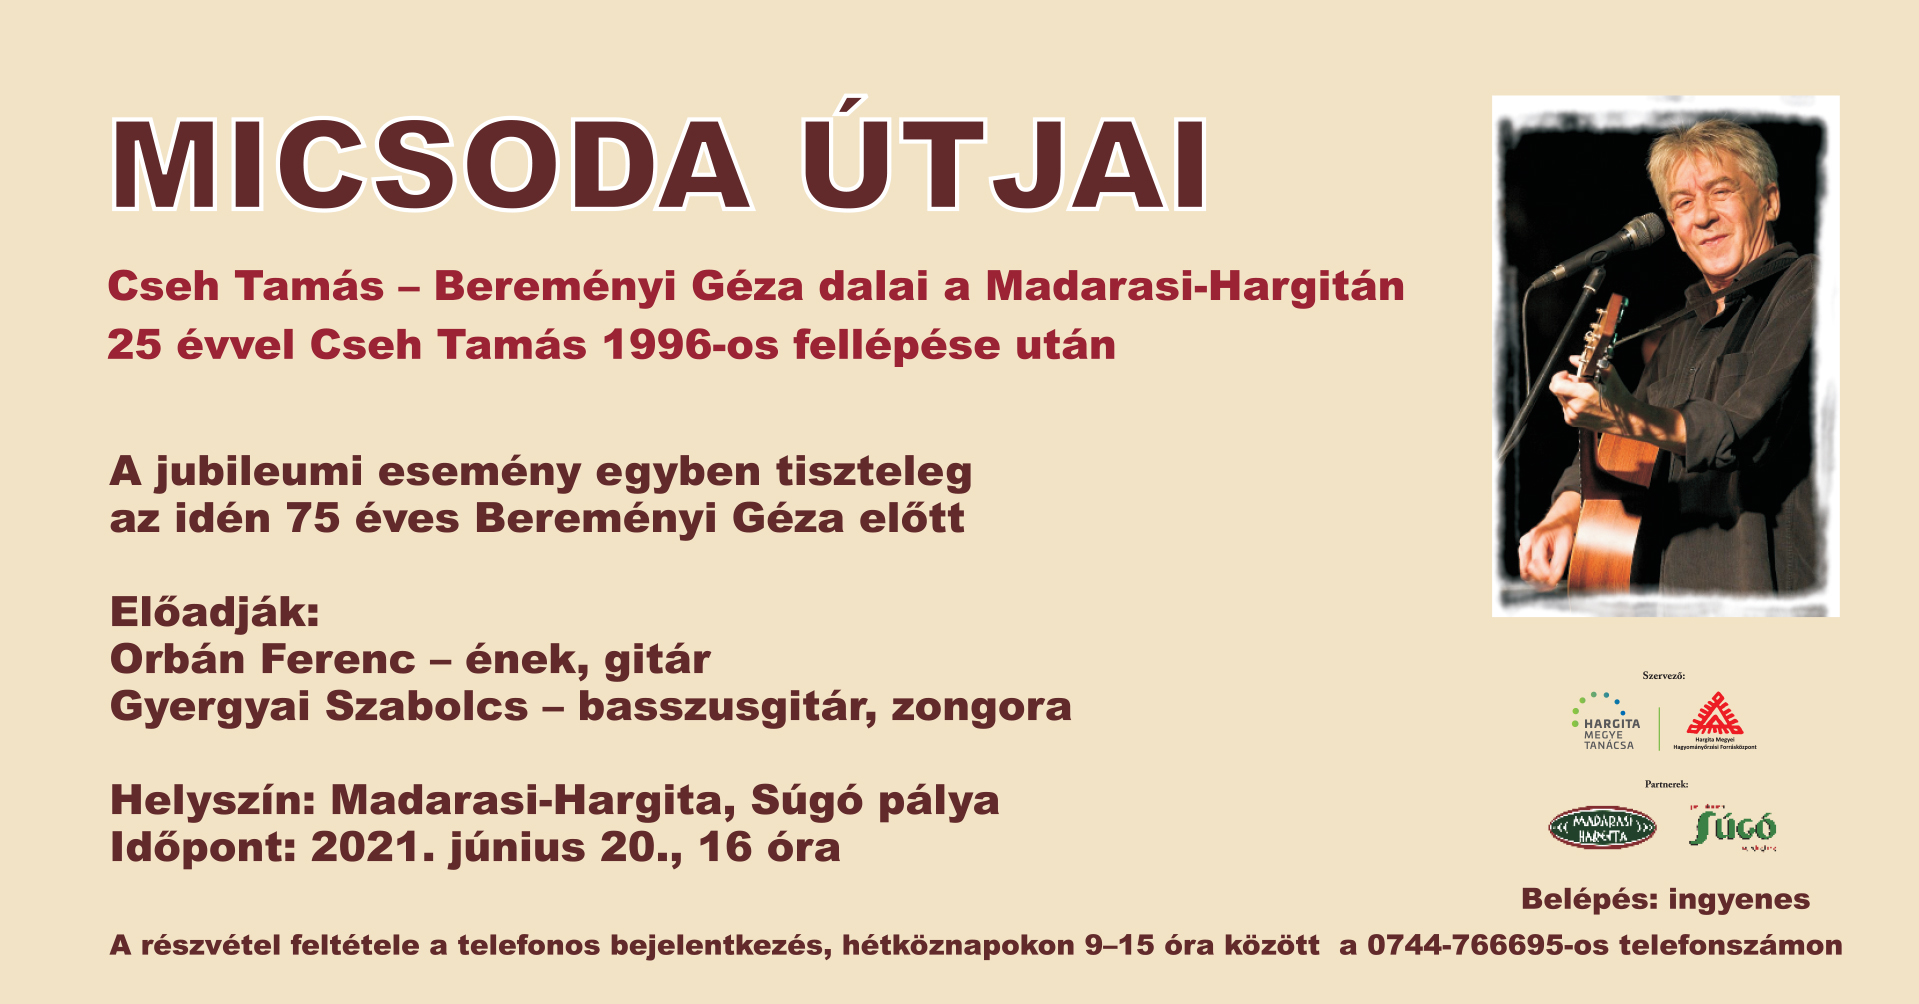 Micsoda útjai - Cseh Tamás és Bereményi Géza dalai a Madarasi-Hargitán